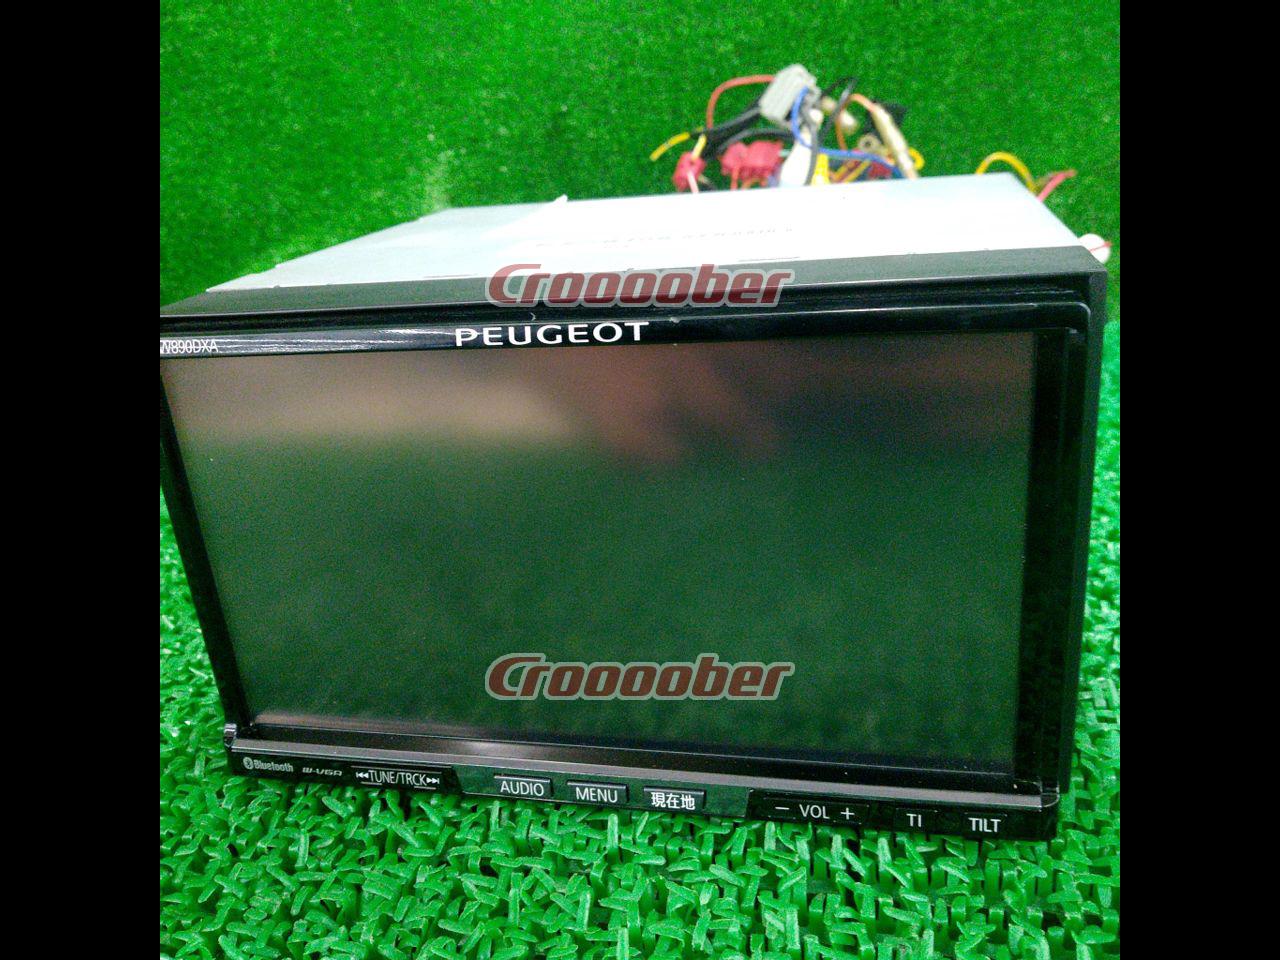 Panasonic PEUGEOT CN-HW890DXA  Bluetooth